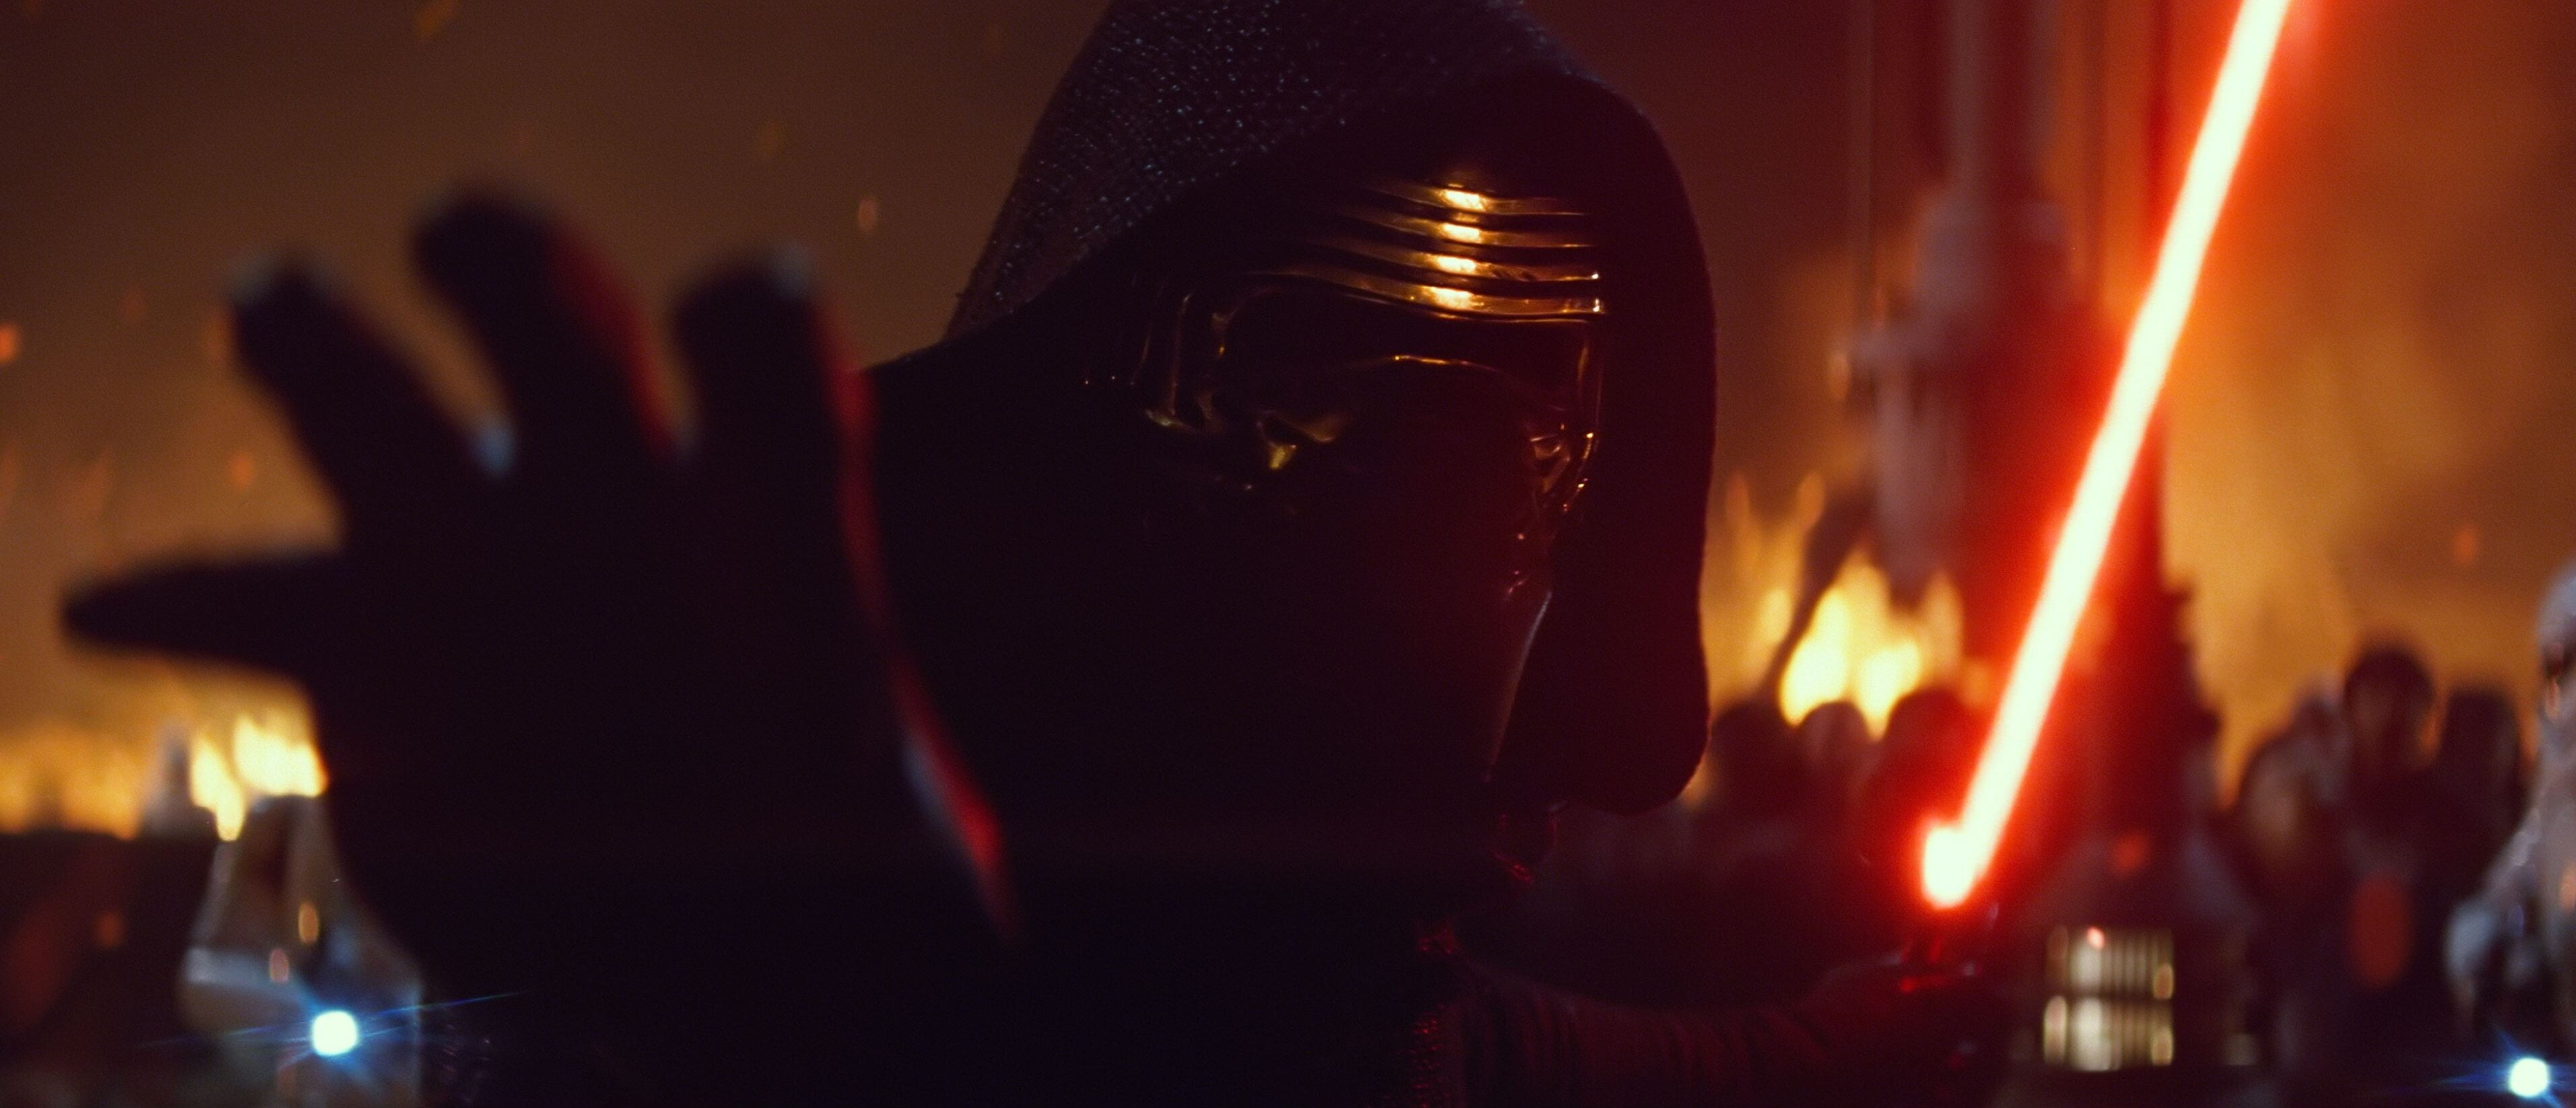 star wars episode vii the force awakens 4k  download for pc